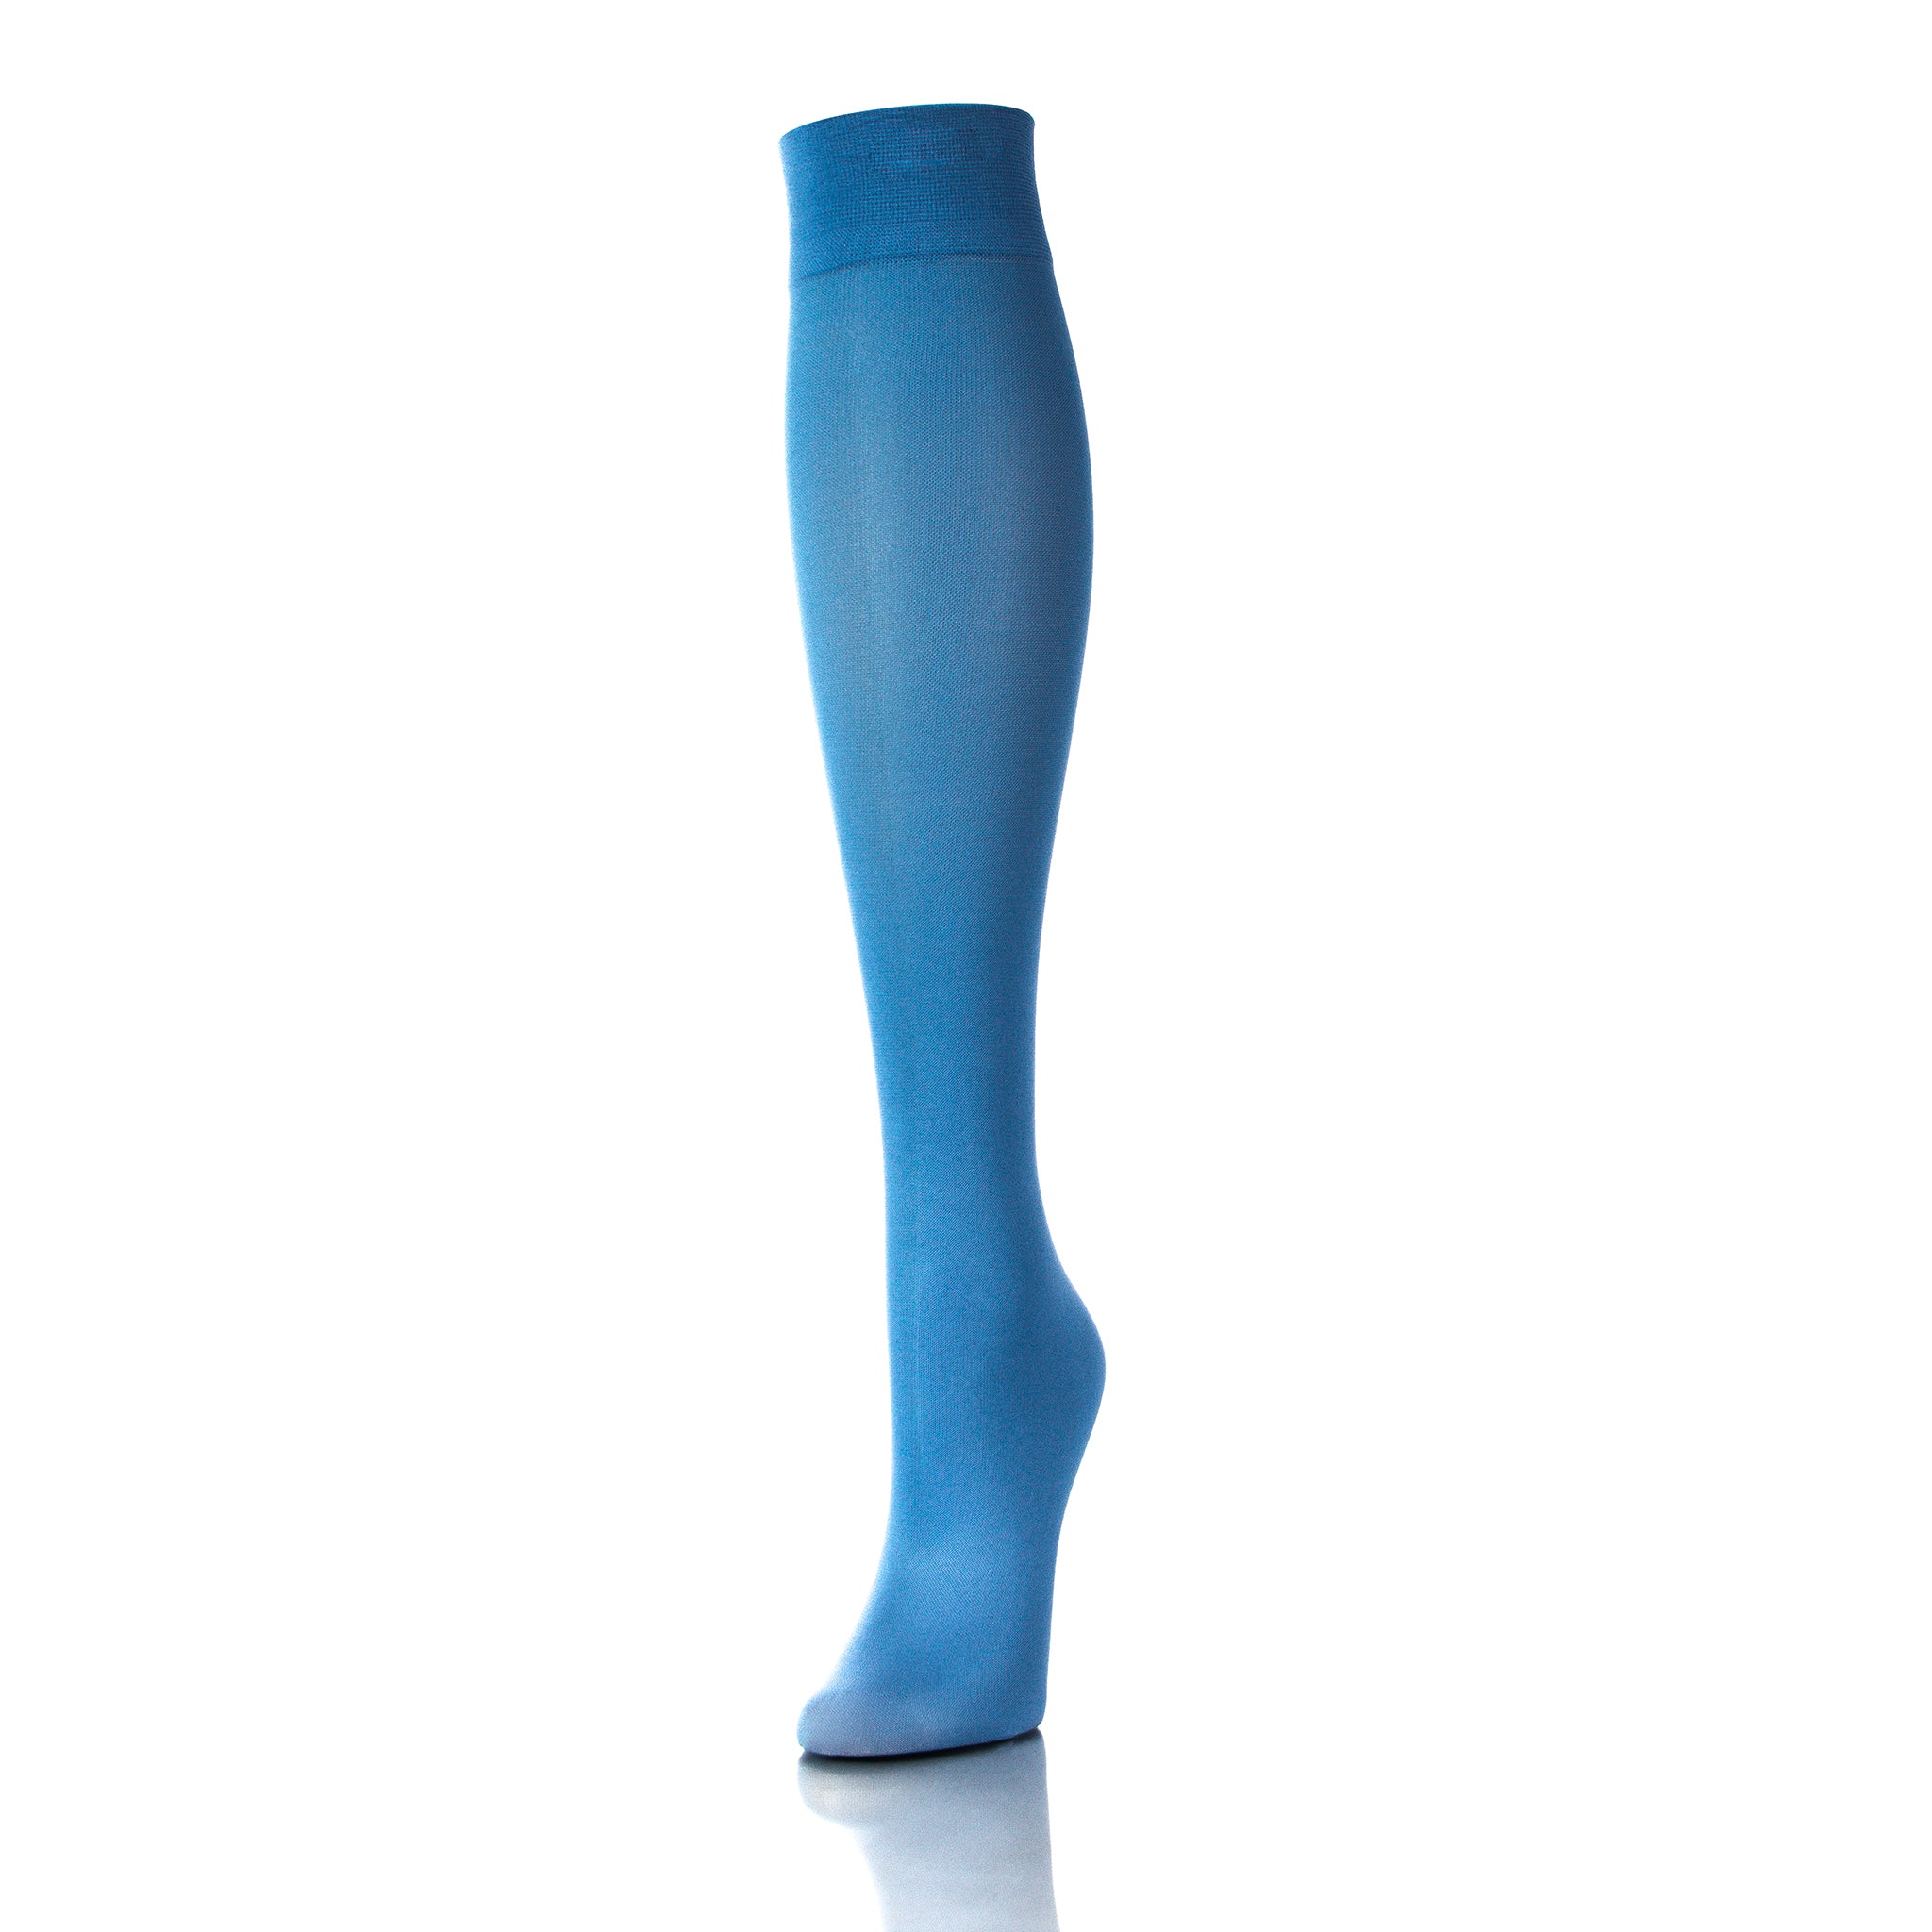 Color Compression Socks - 20 30 mmHg - Knee High